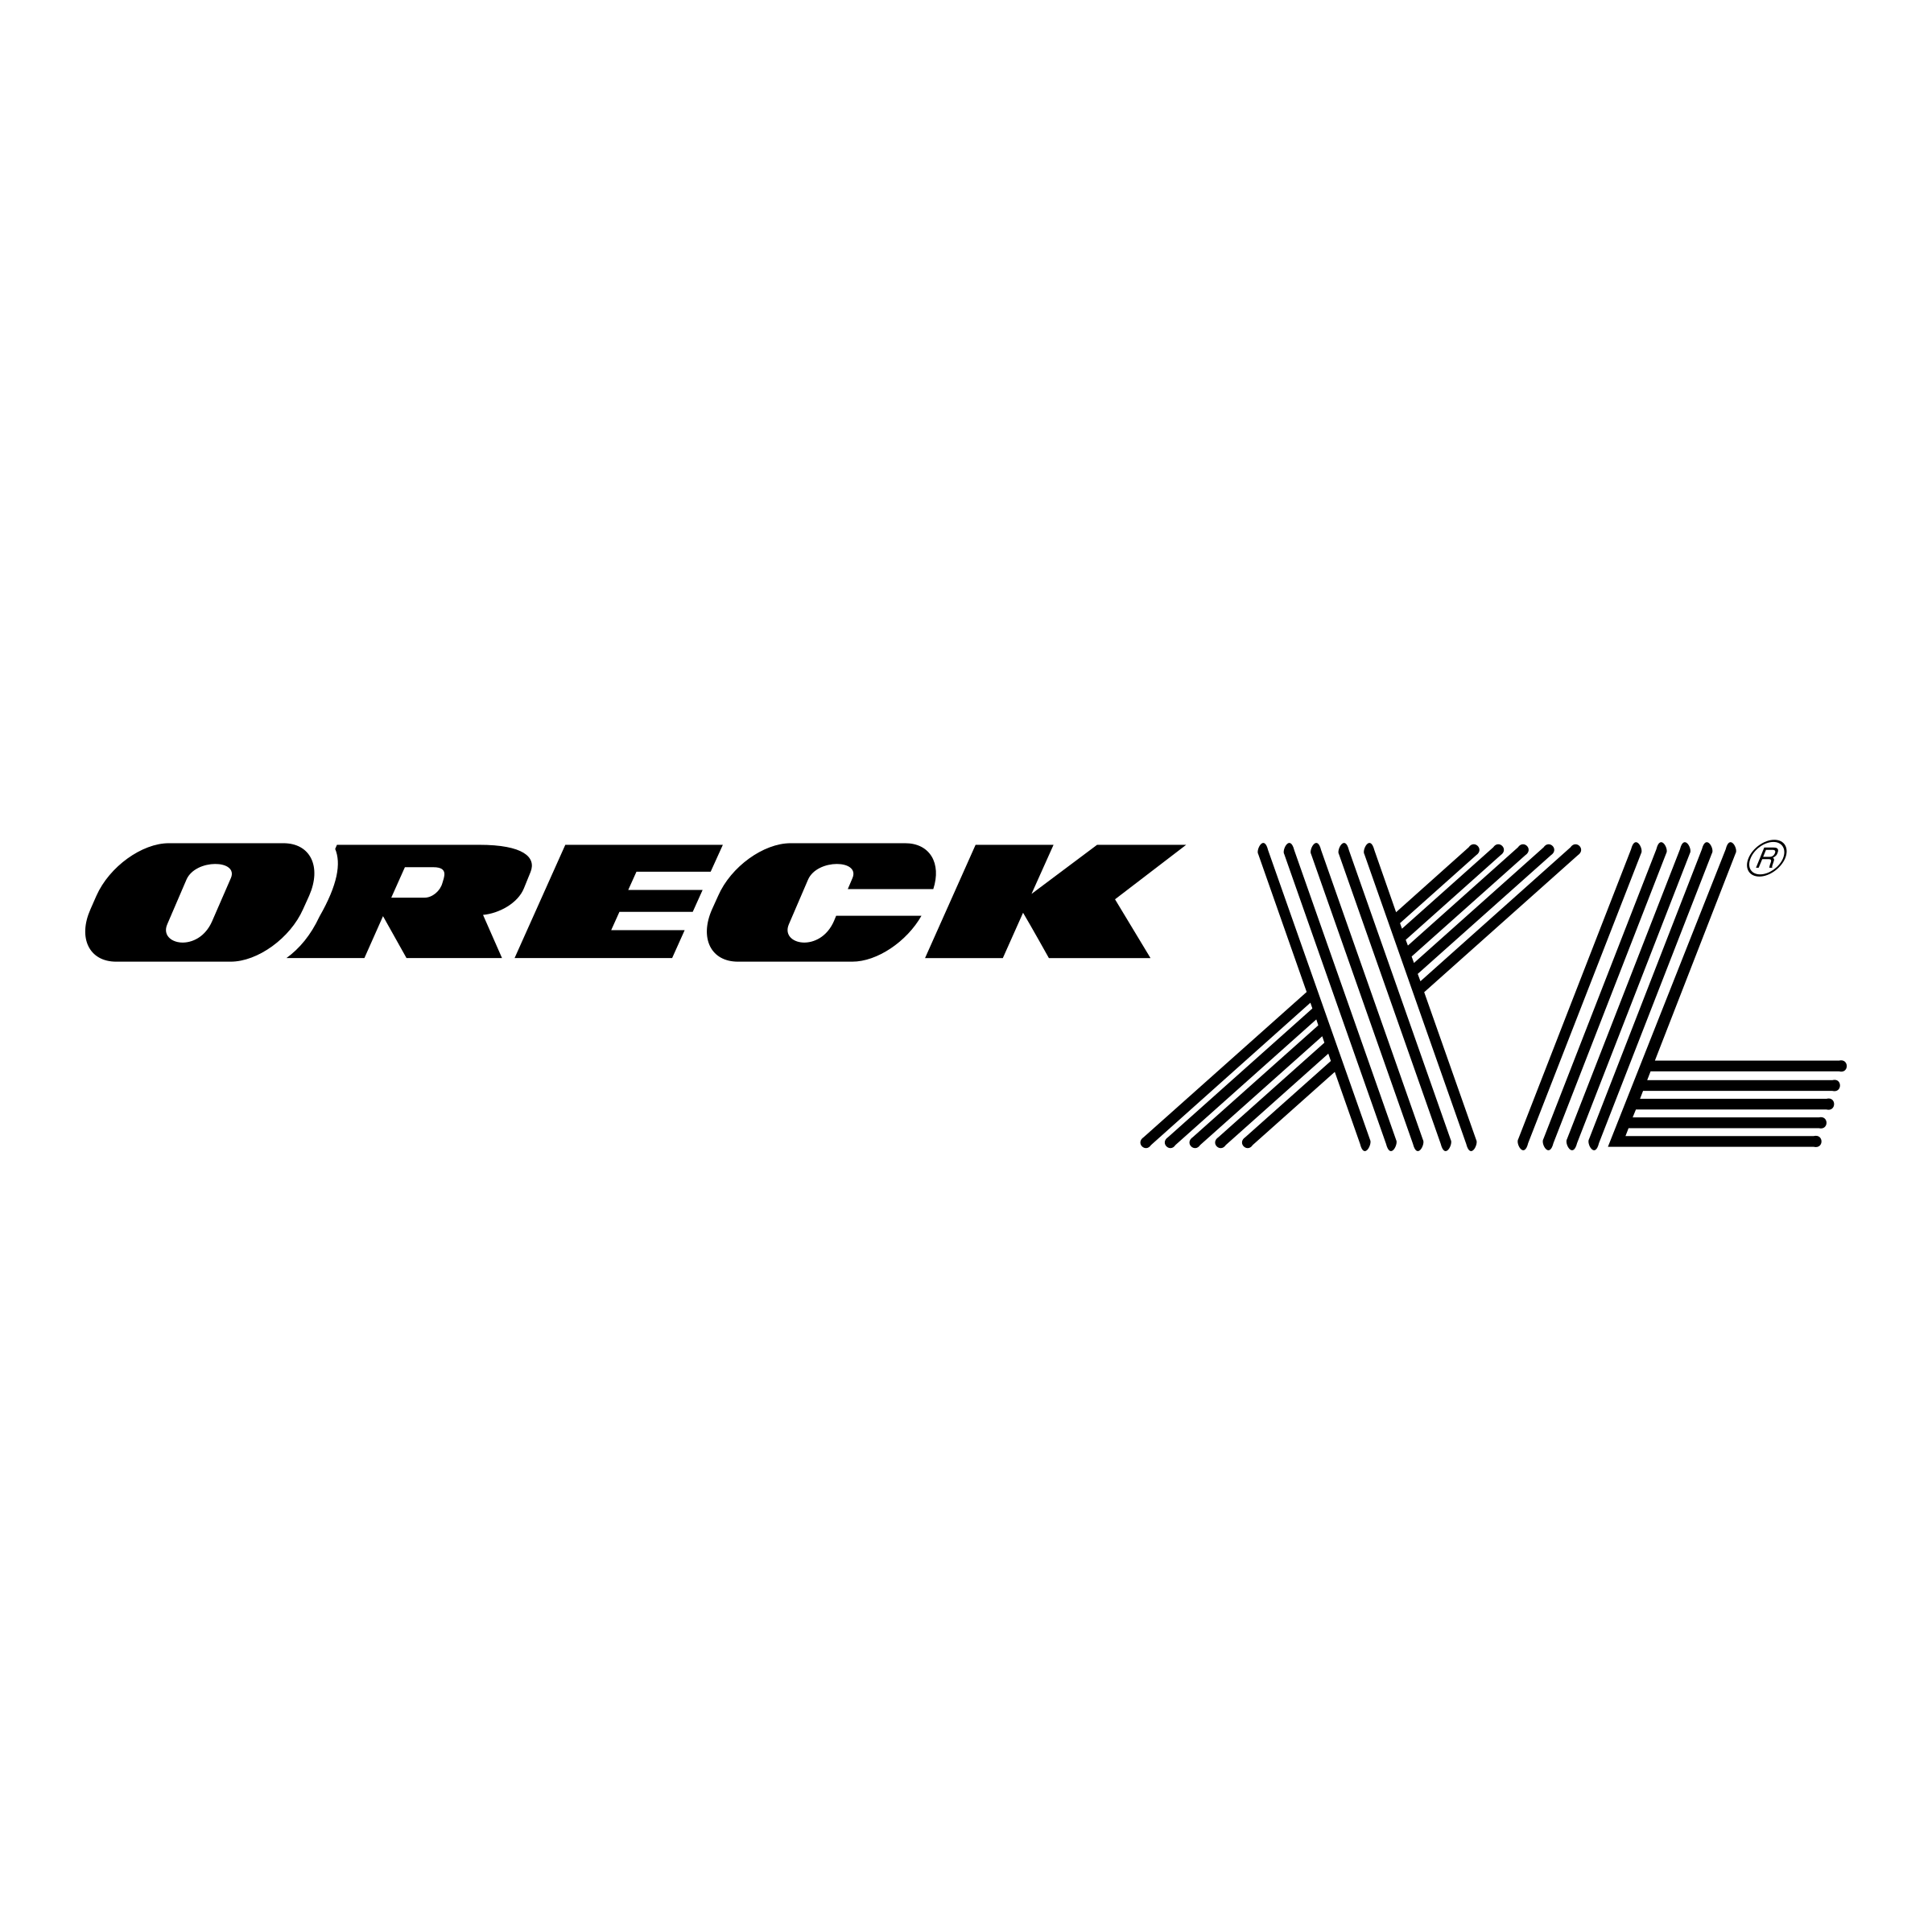 Oreck Logo - Oreck XL Logo PNG Transparent & SVG Vector